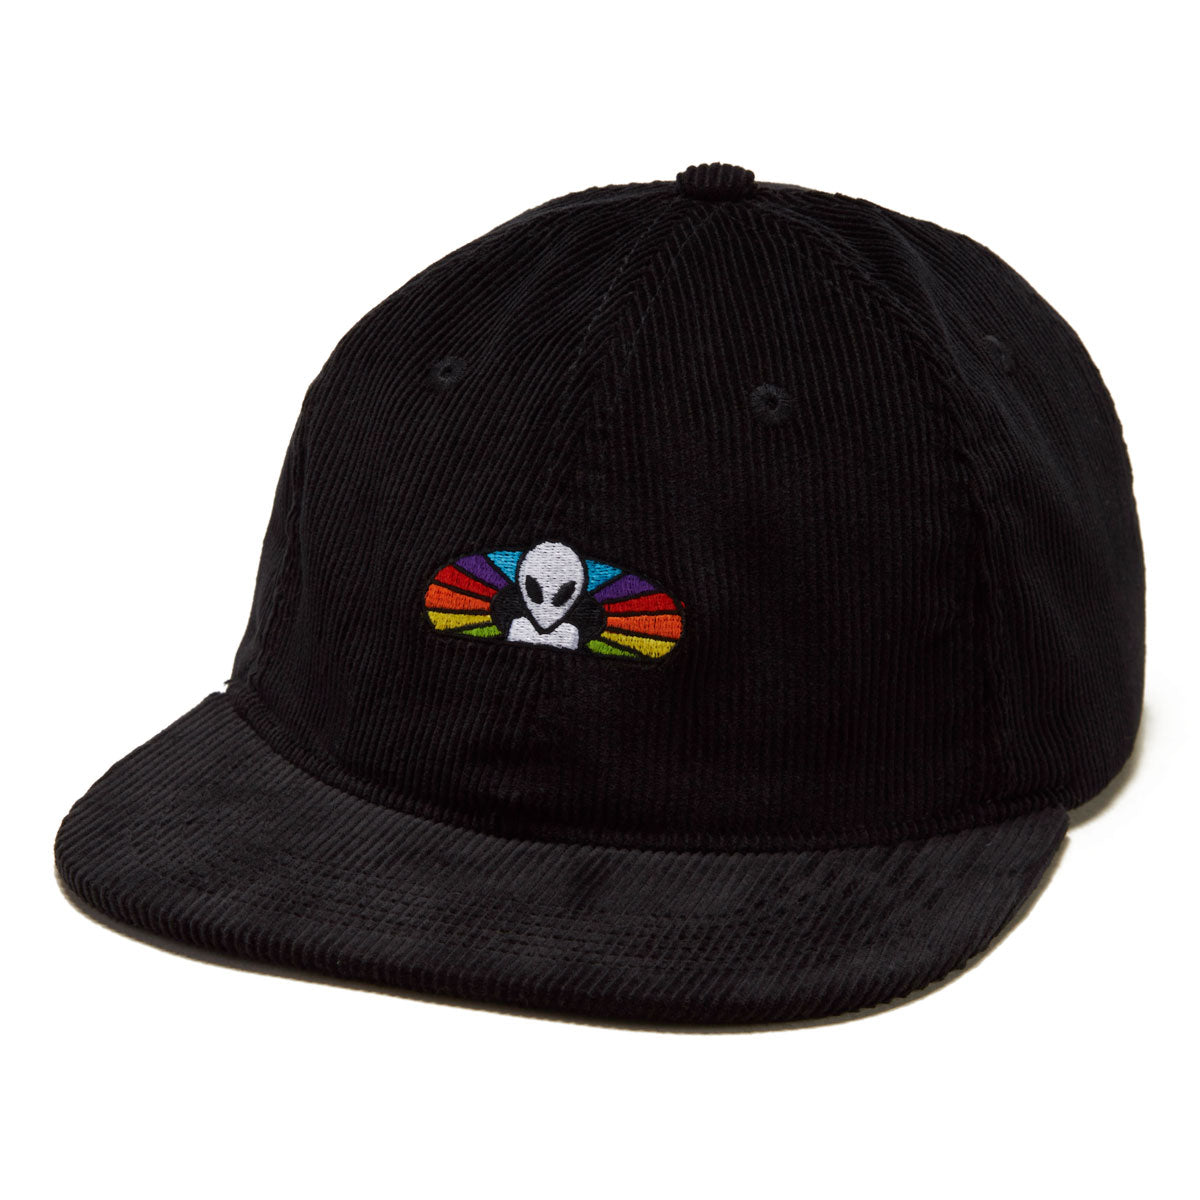 Alien Workshop Spectrum Corduroy Hat - Black image 1